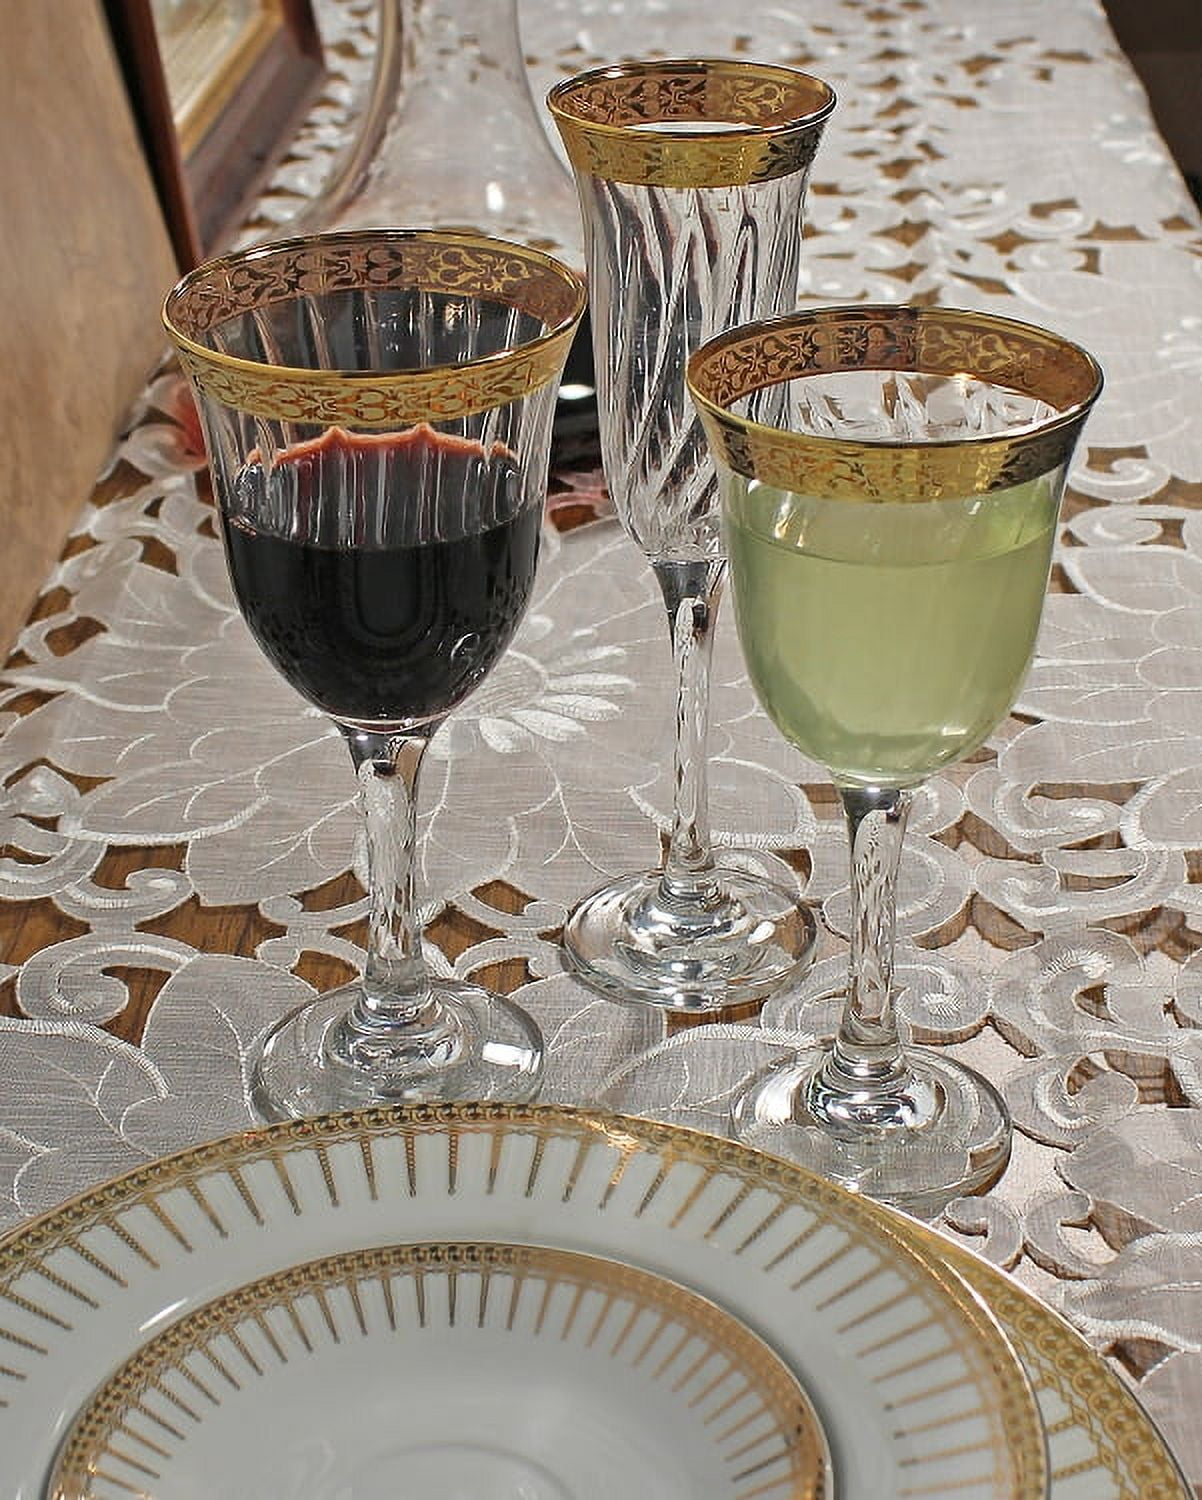 Octophil White Wine Glass // Box of 4 - Stölzle USA - Touch of Modern